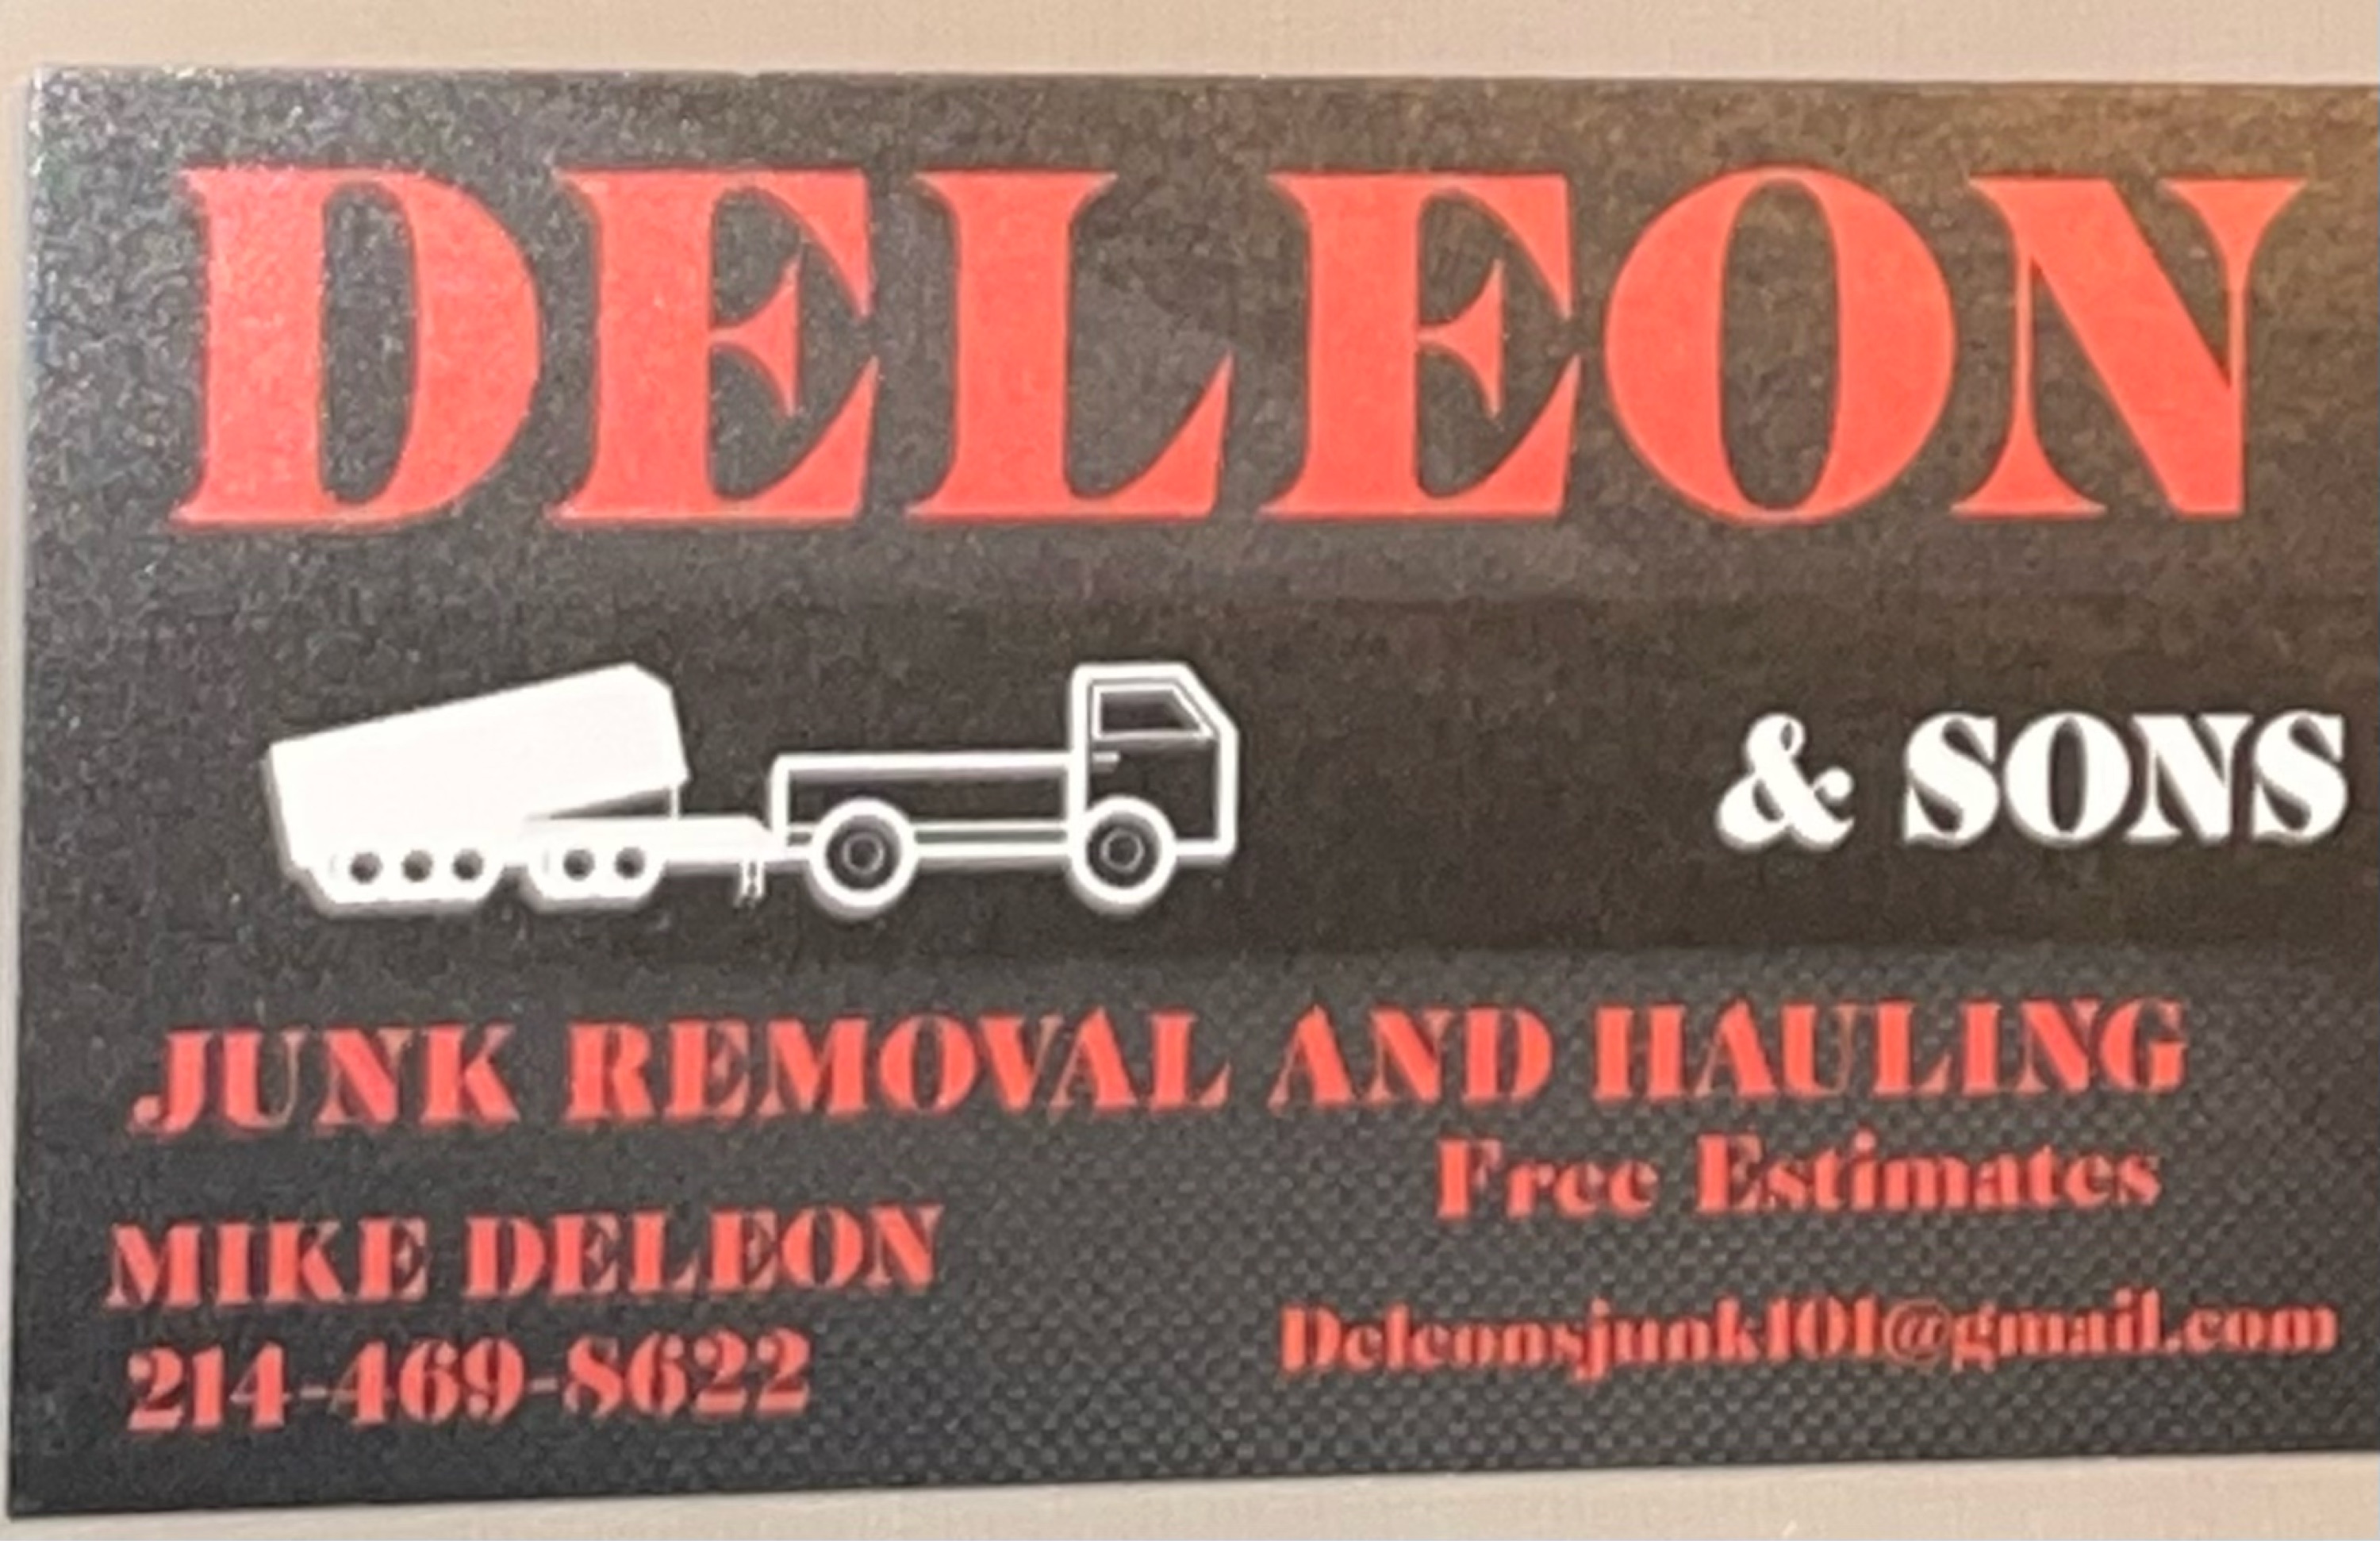 Deleon & Sons Junk Removal & Hauling Logo